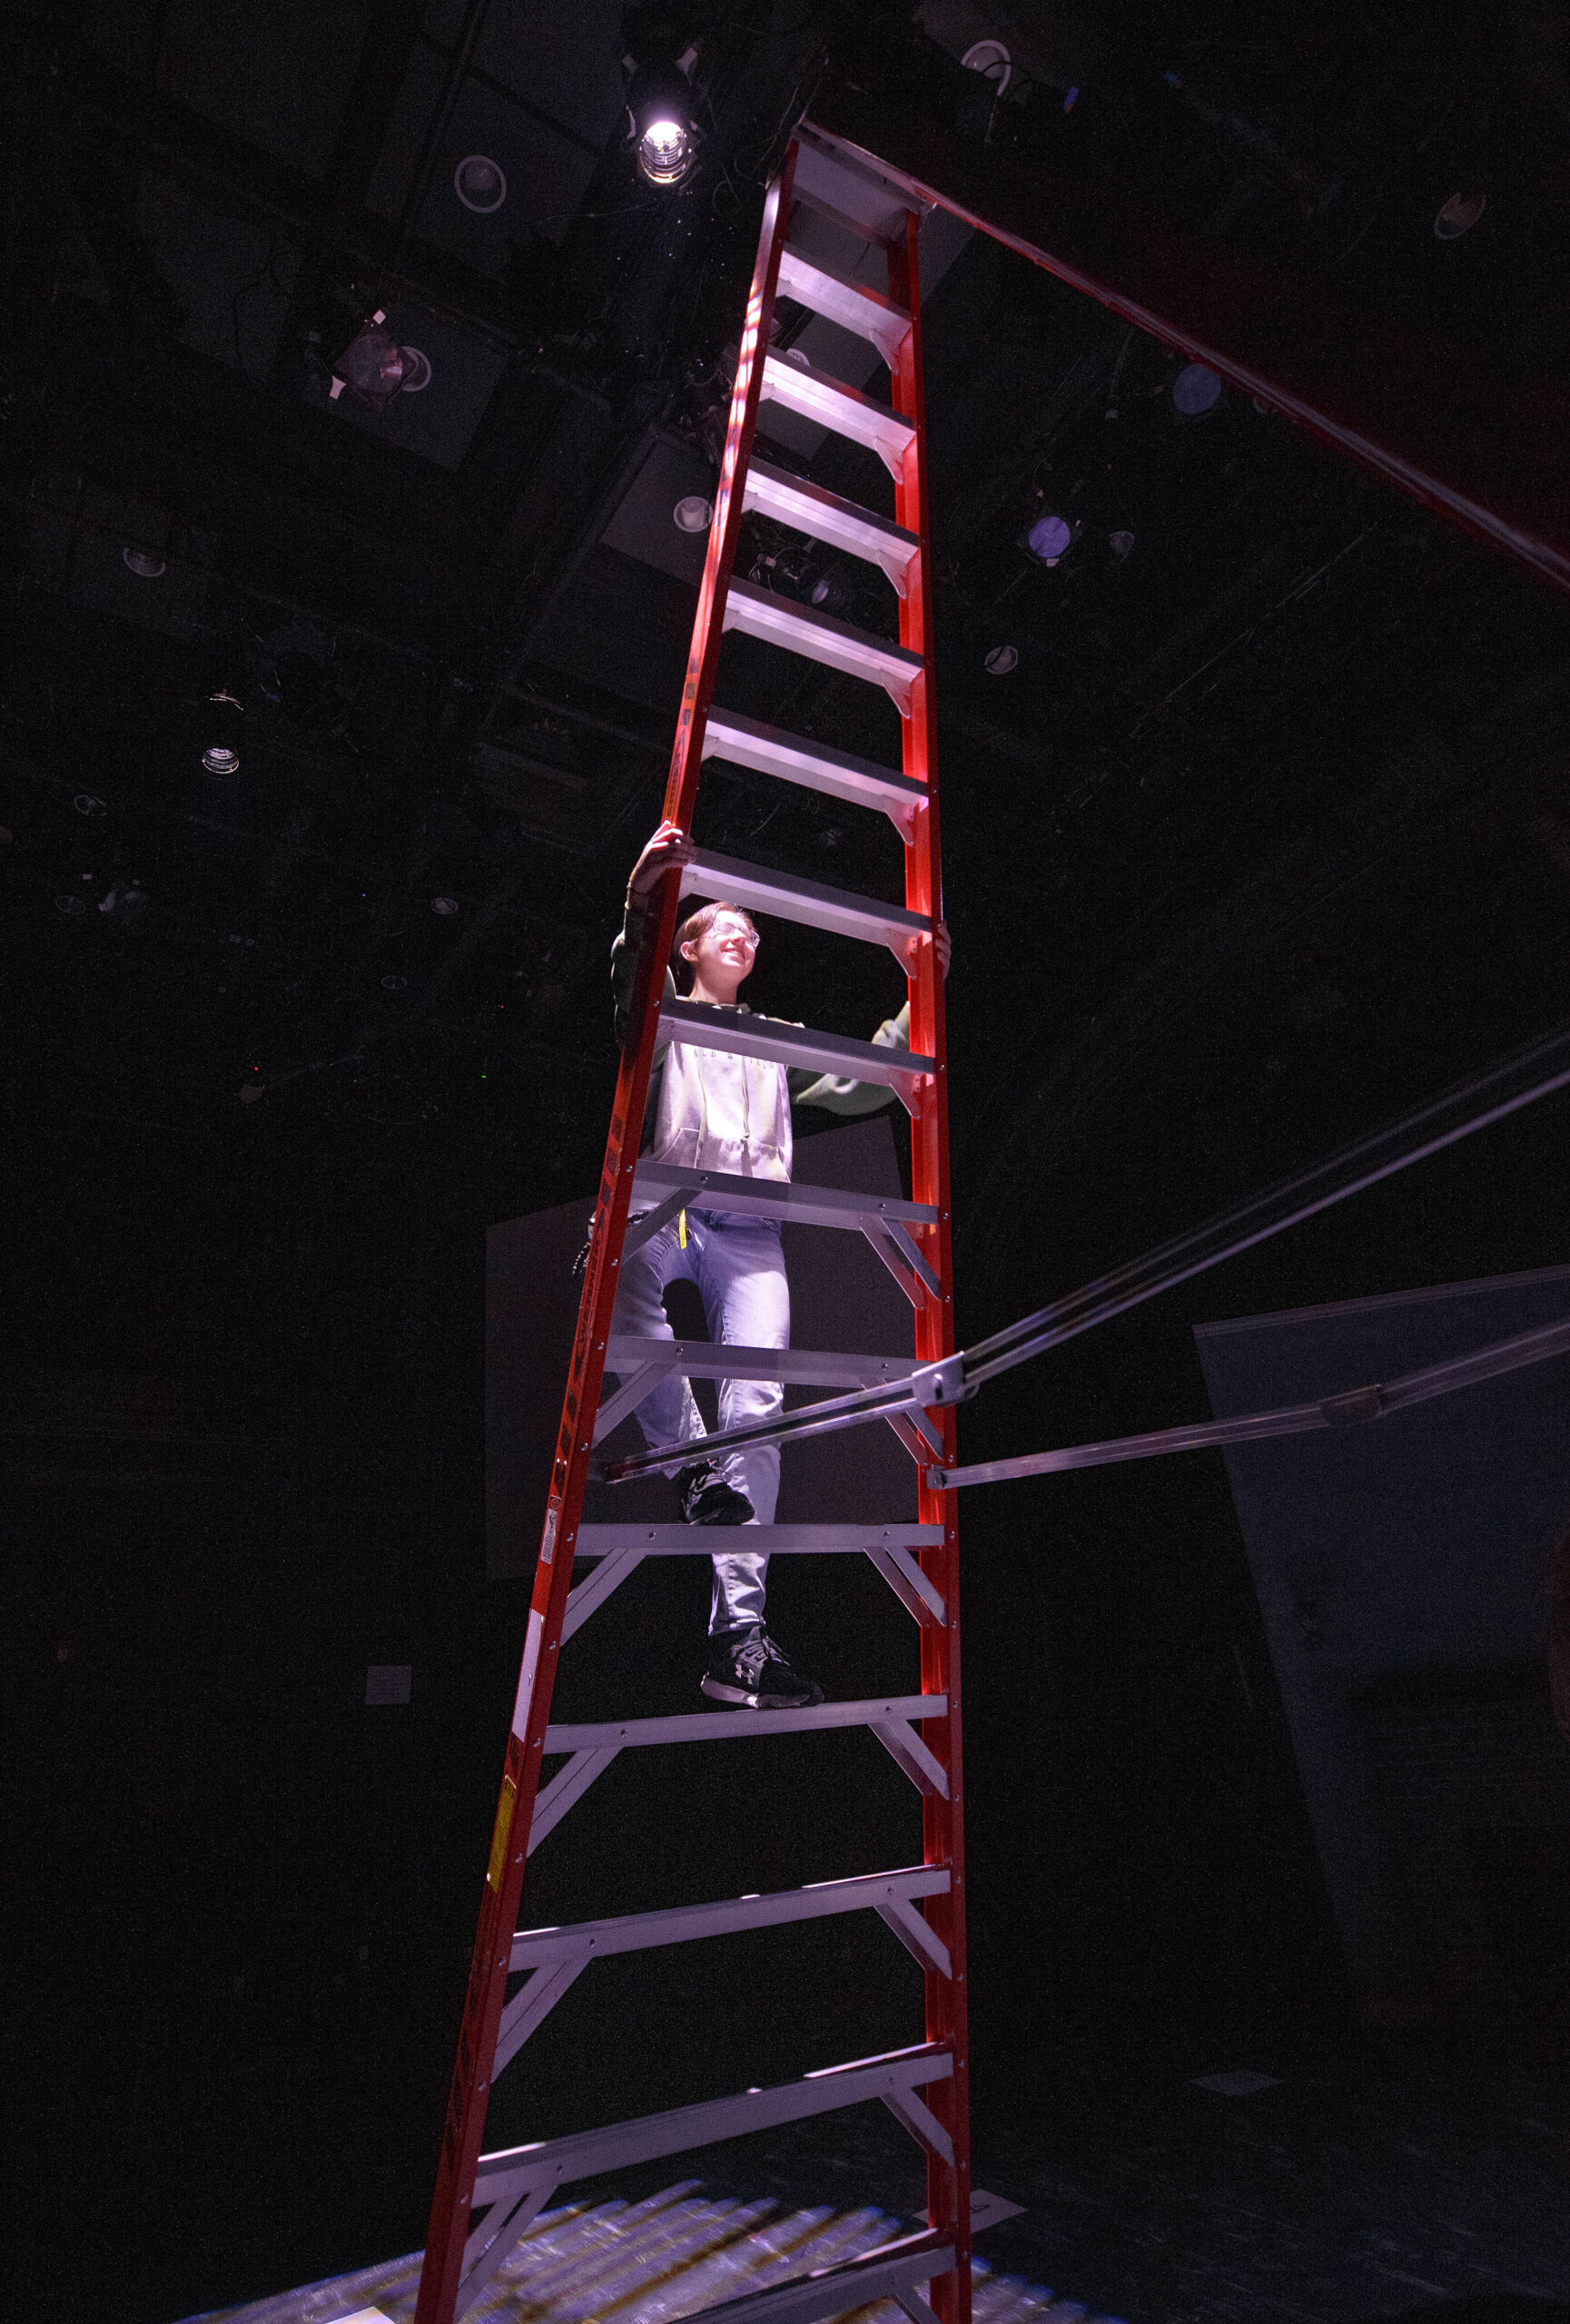 Person climbs a ladder in a dark room.